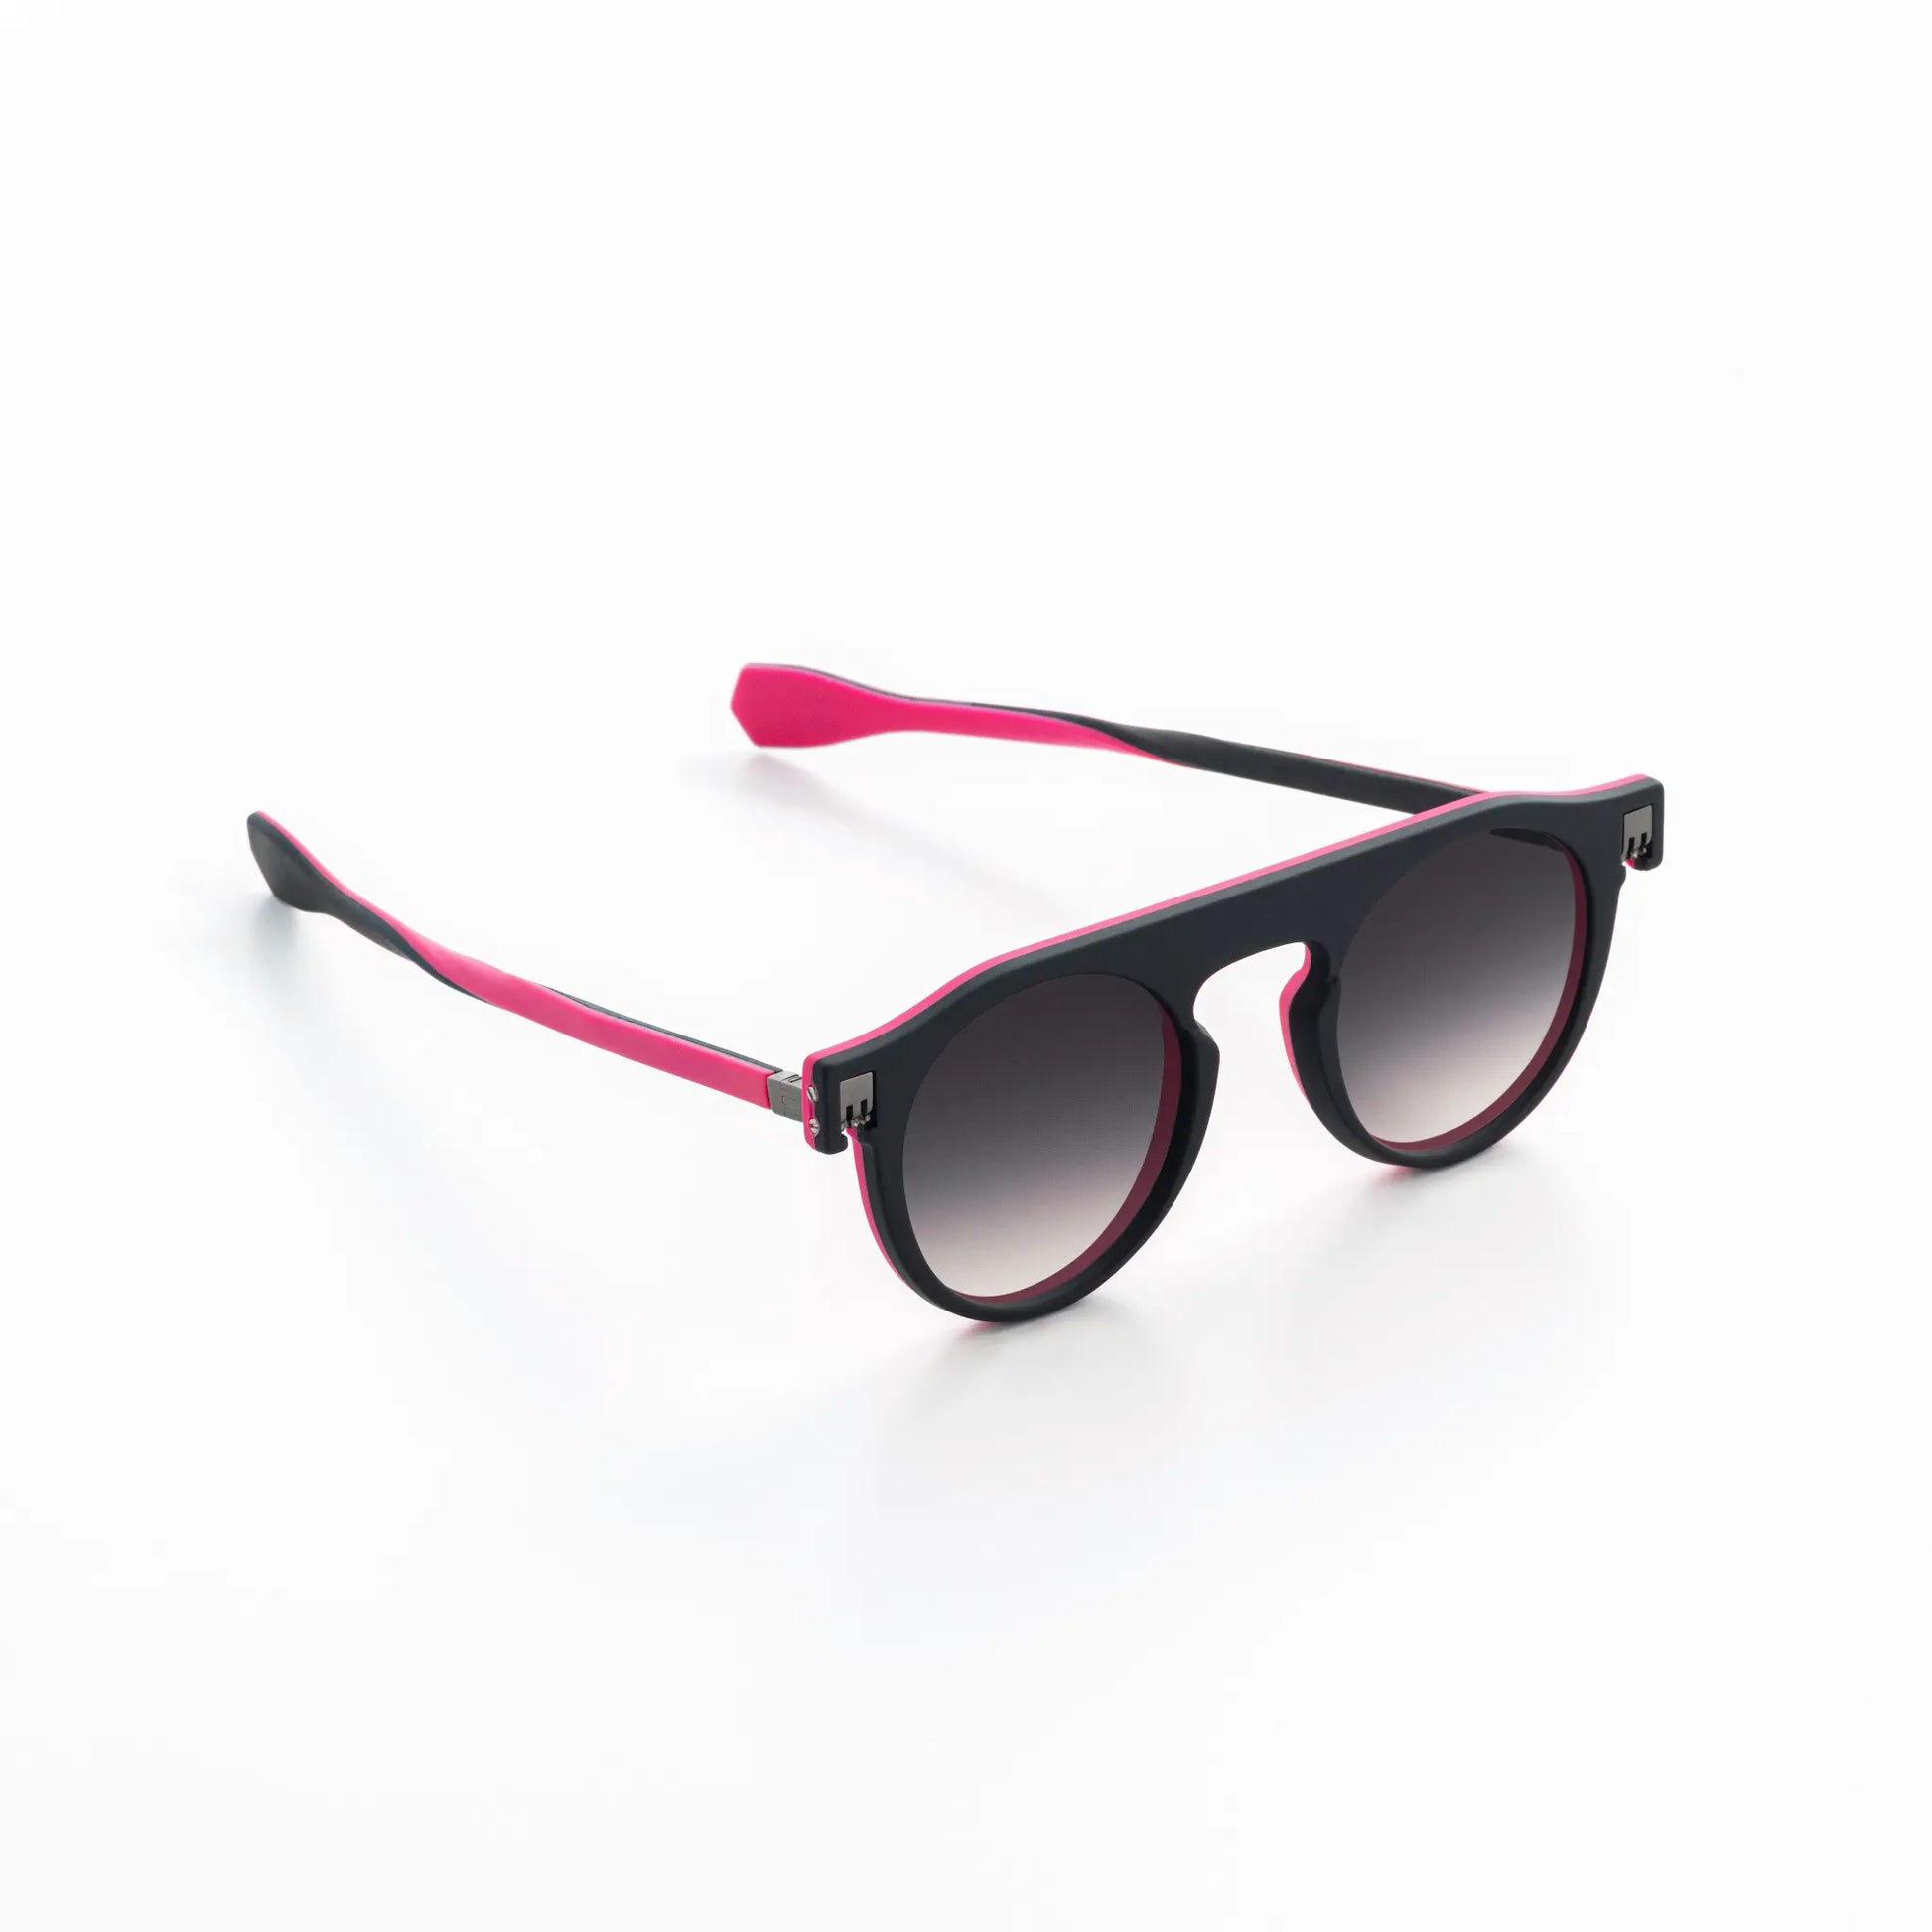 Reverso sunglasses black & pink reversible & ultra light side view 1